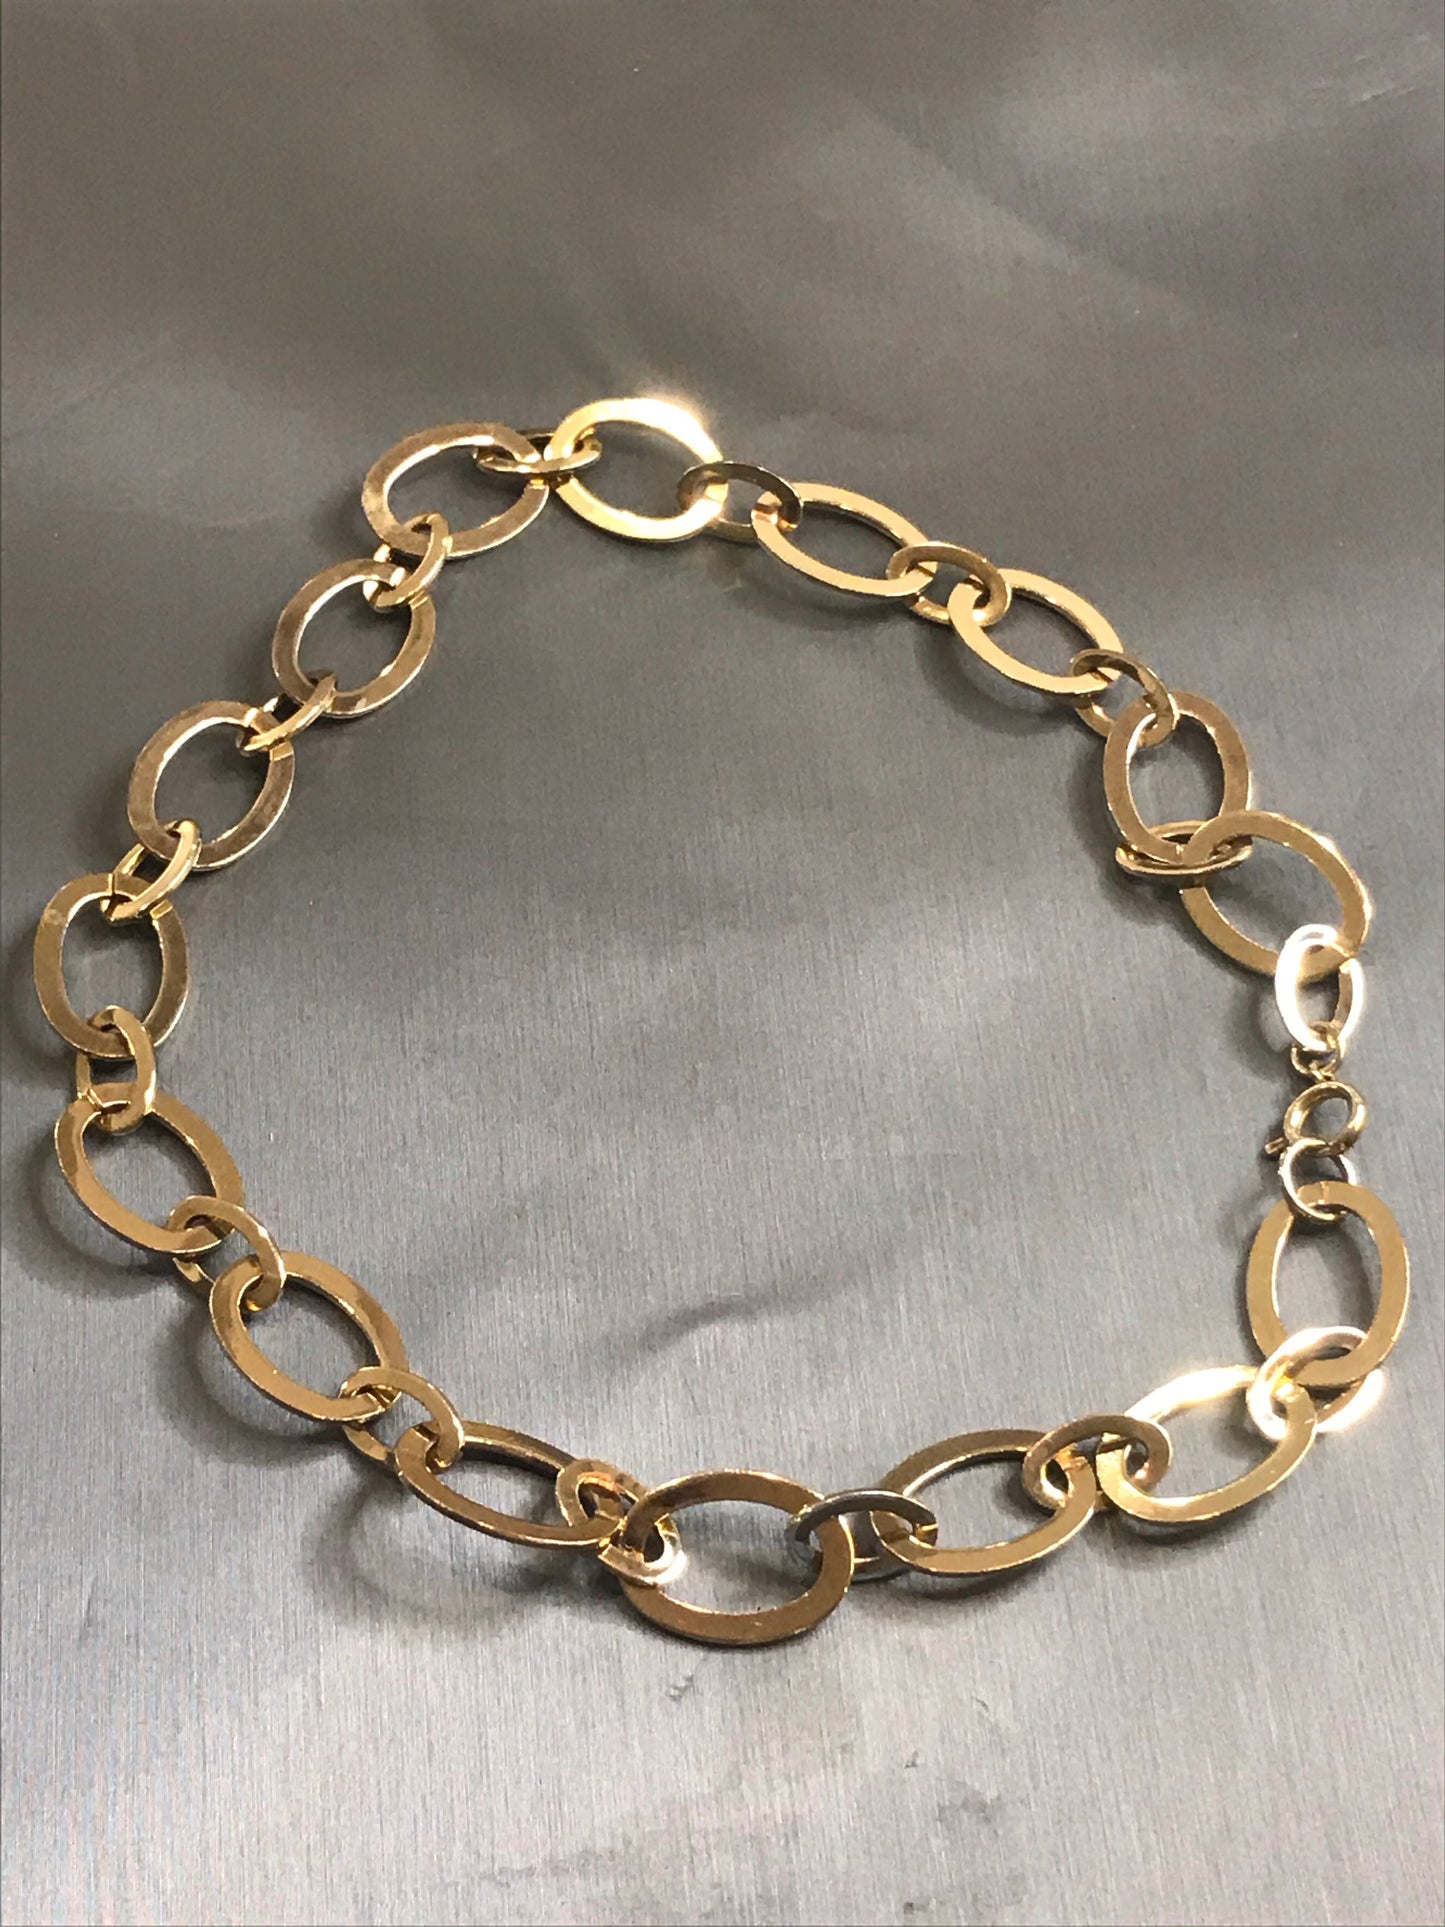 Goldilocks Chain Link Necklace